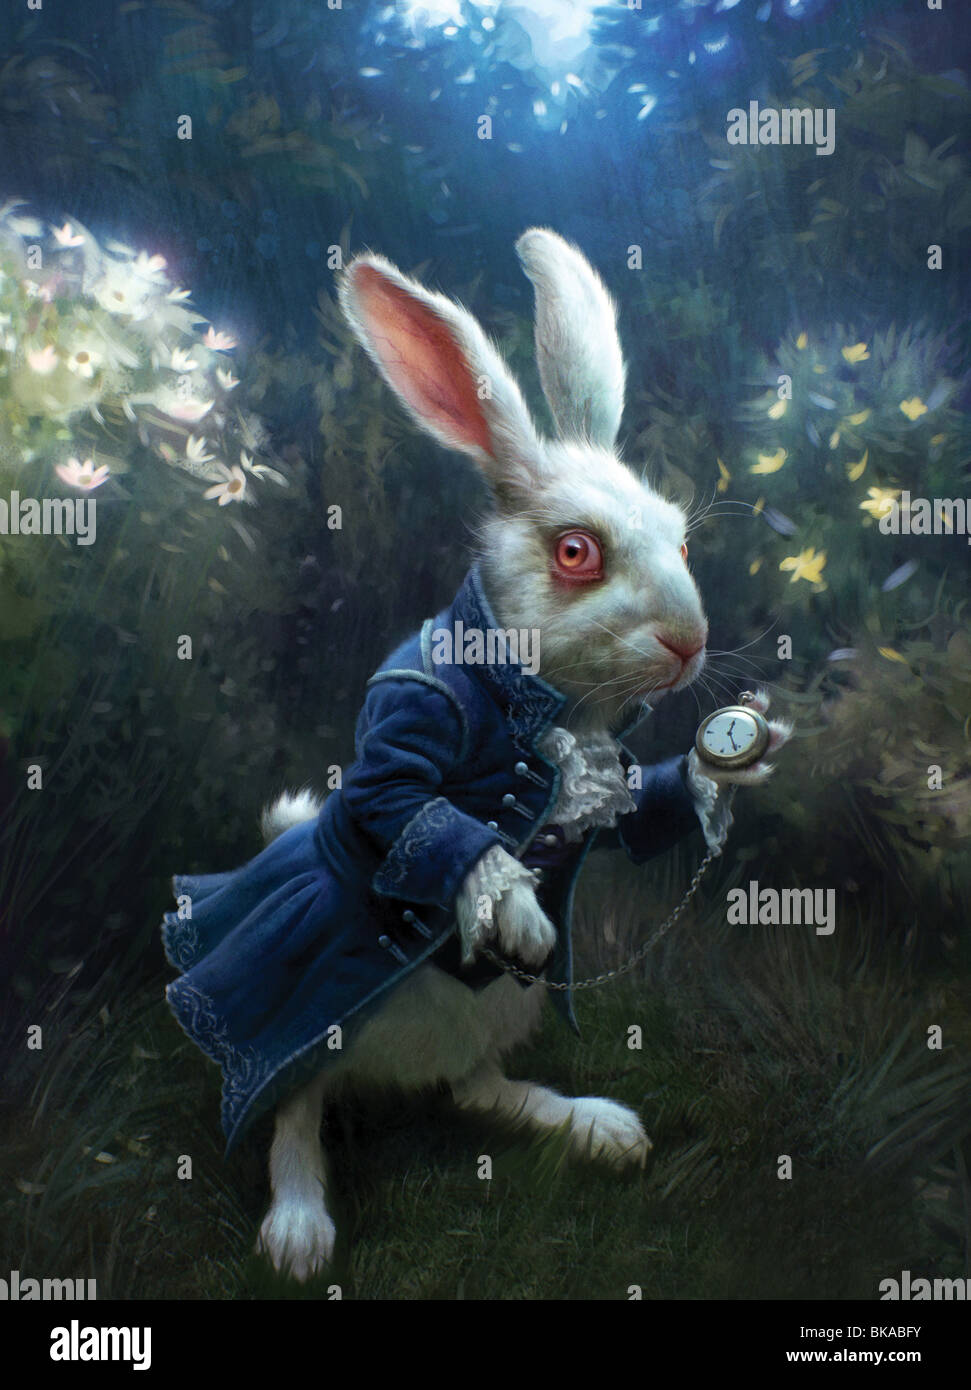 Alice in Wonderland Year: 2010 - USA Director: Tim Burton Concept Art White Rabbit - illustration by Michael Kutsche Stock Photo